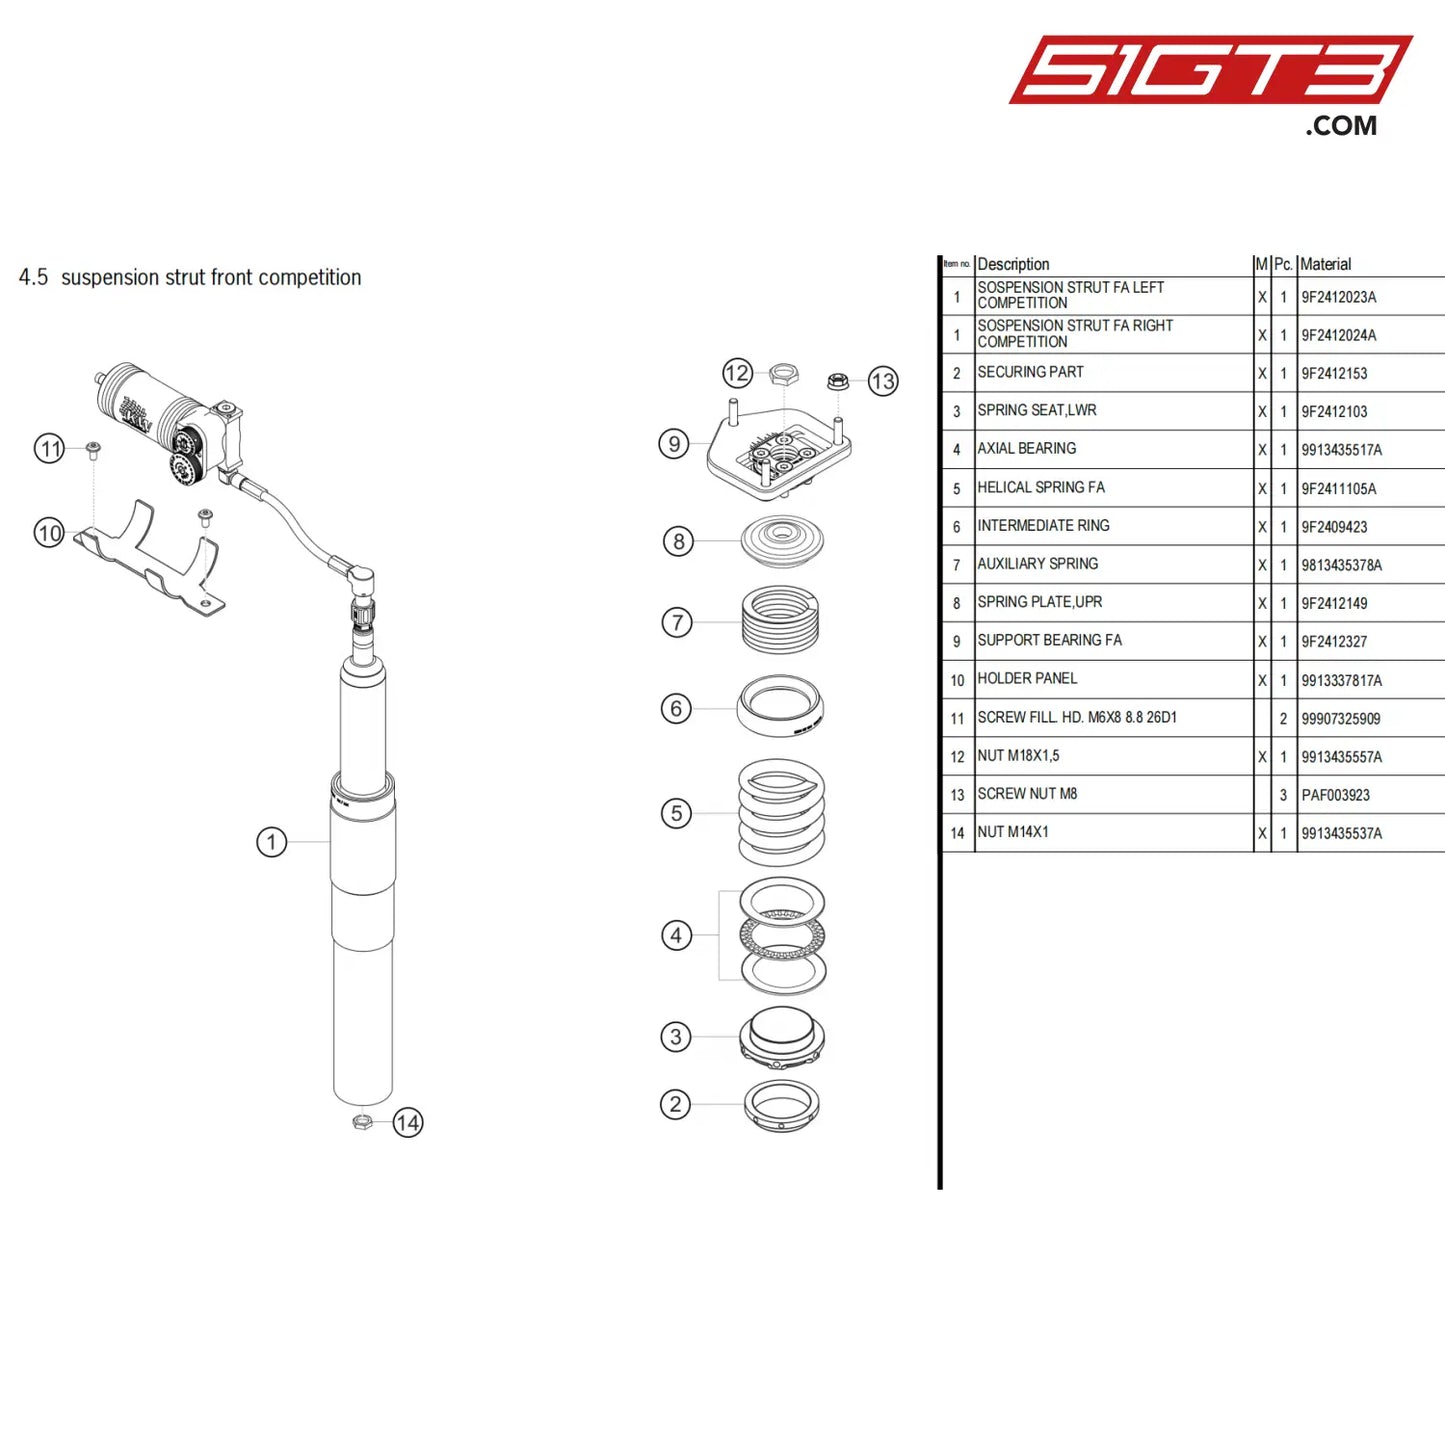 Holder Panel - 9913337817A [Porsche 718 Cayman Gt4 Clubsport] Suspension Strut Front Competition